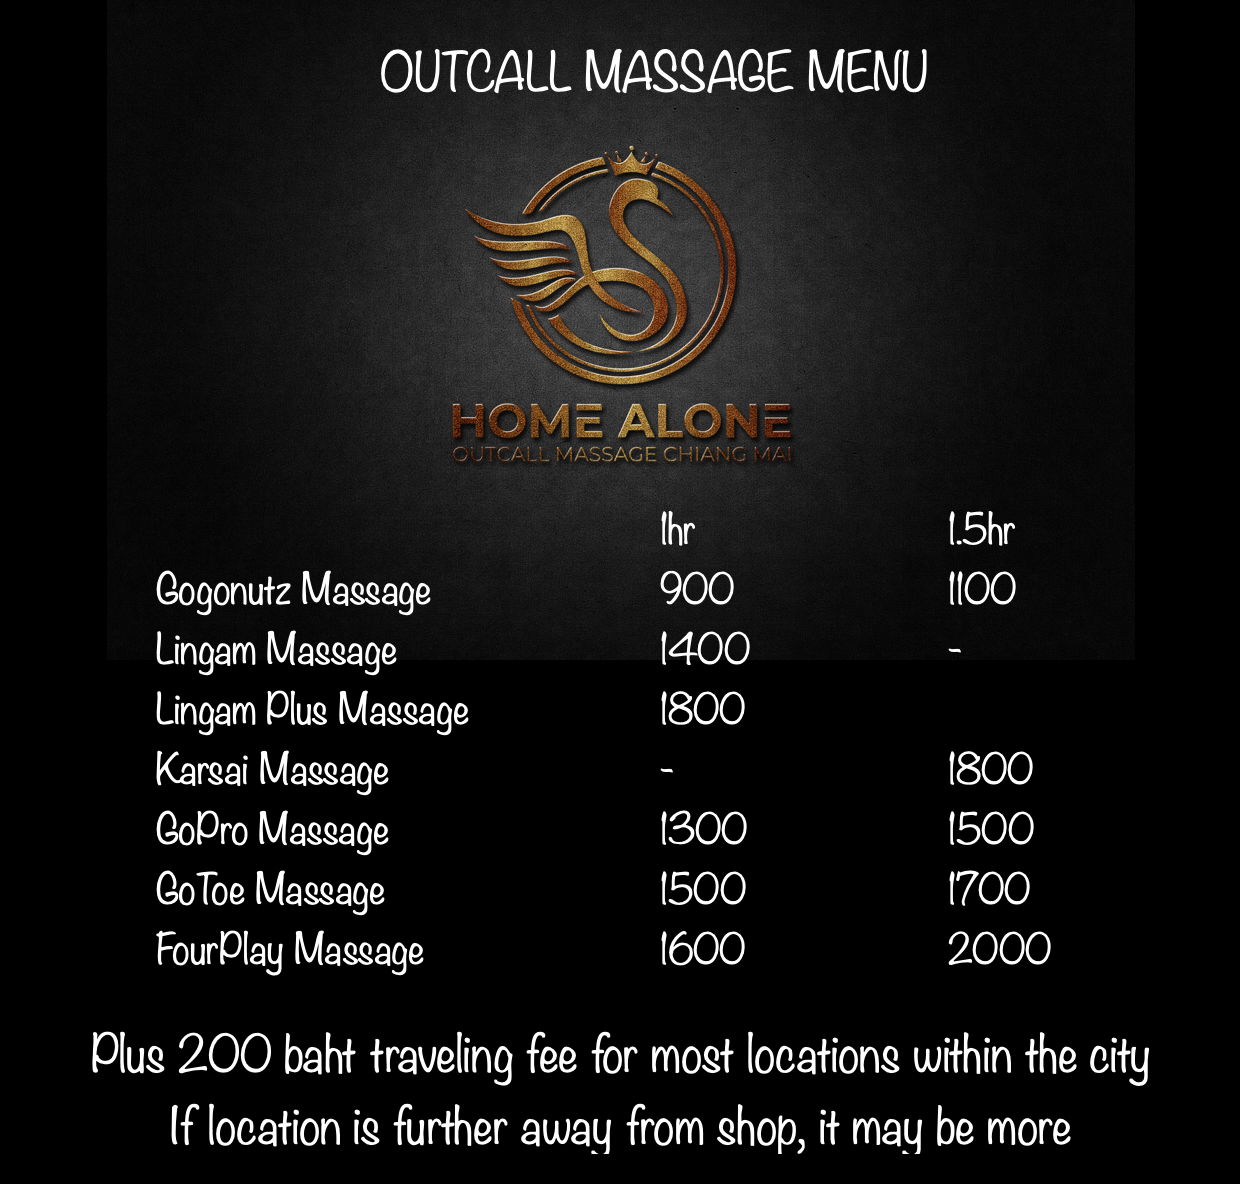 Home Alone Outcall Massage Chiang Mai menu โฮมอะโลน นวดนอกสถานที่เชียงใหม่